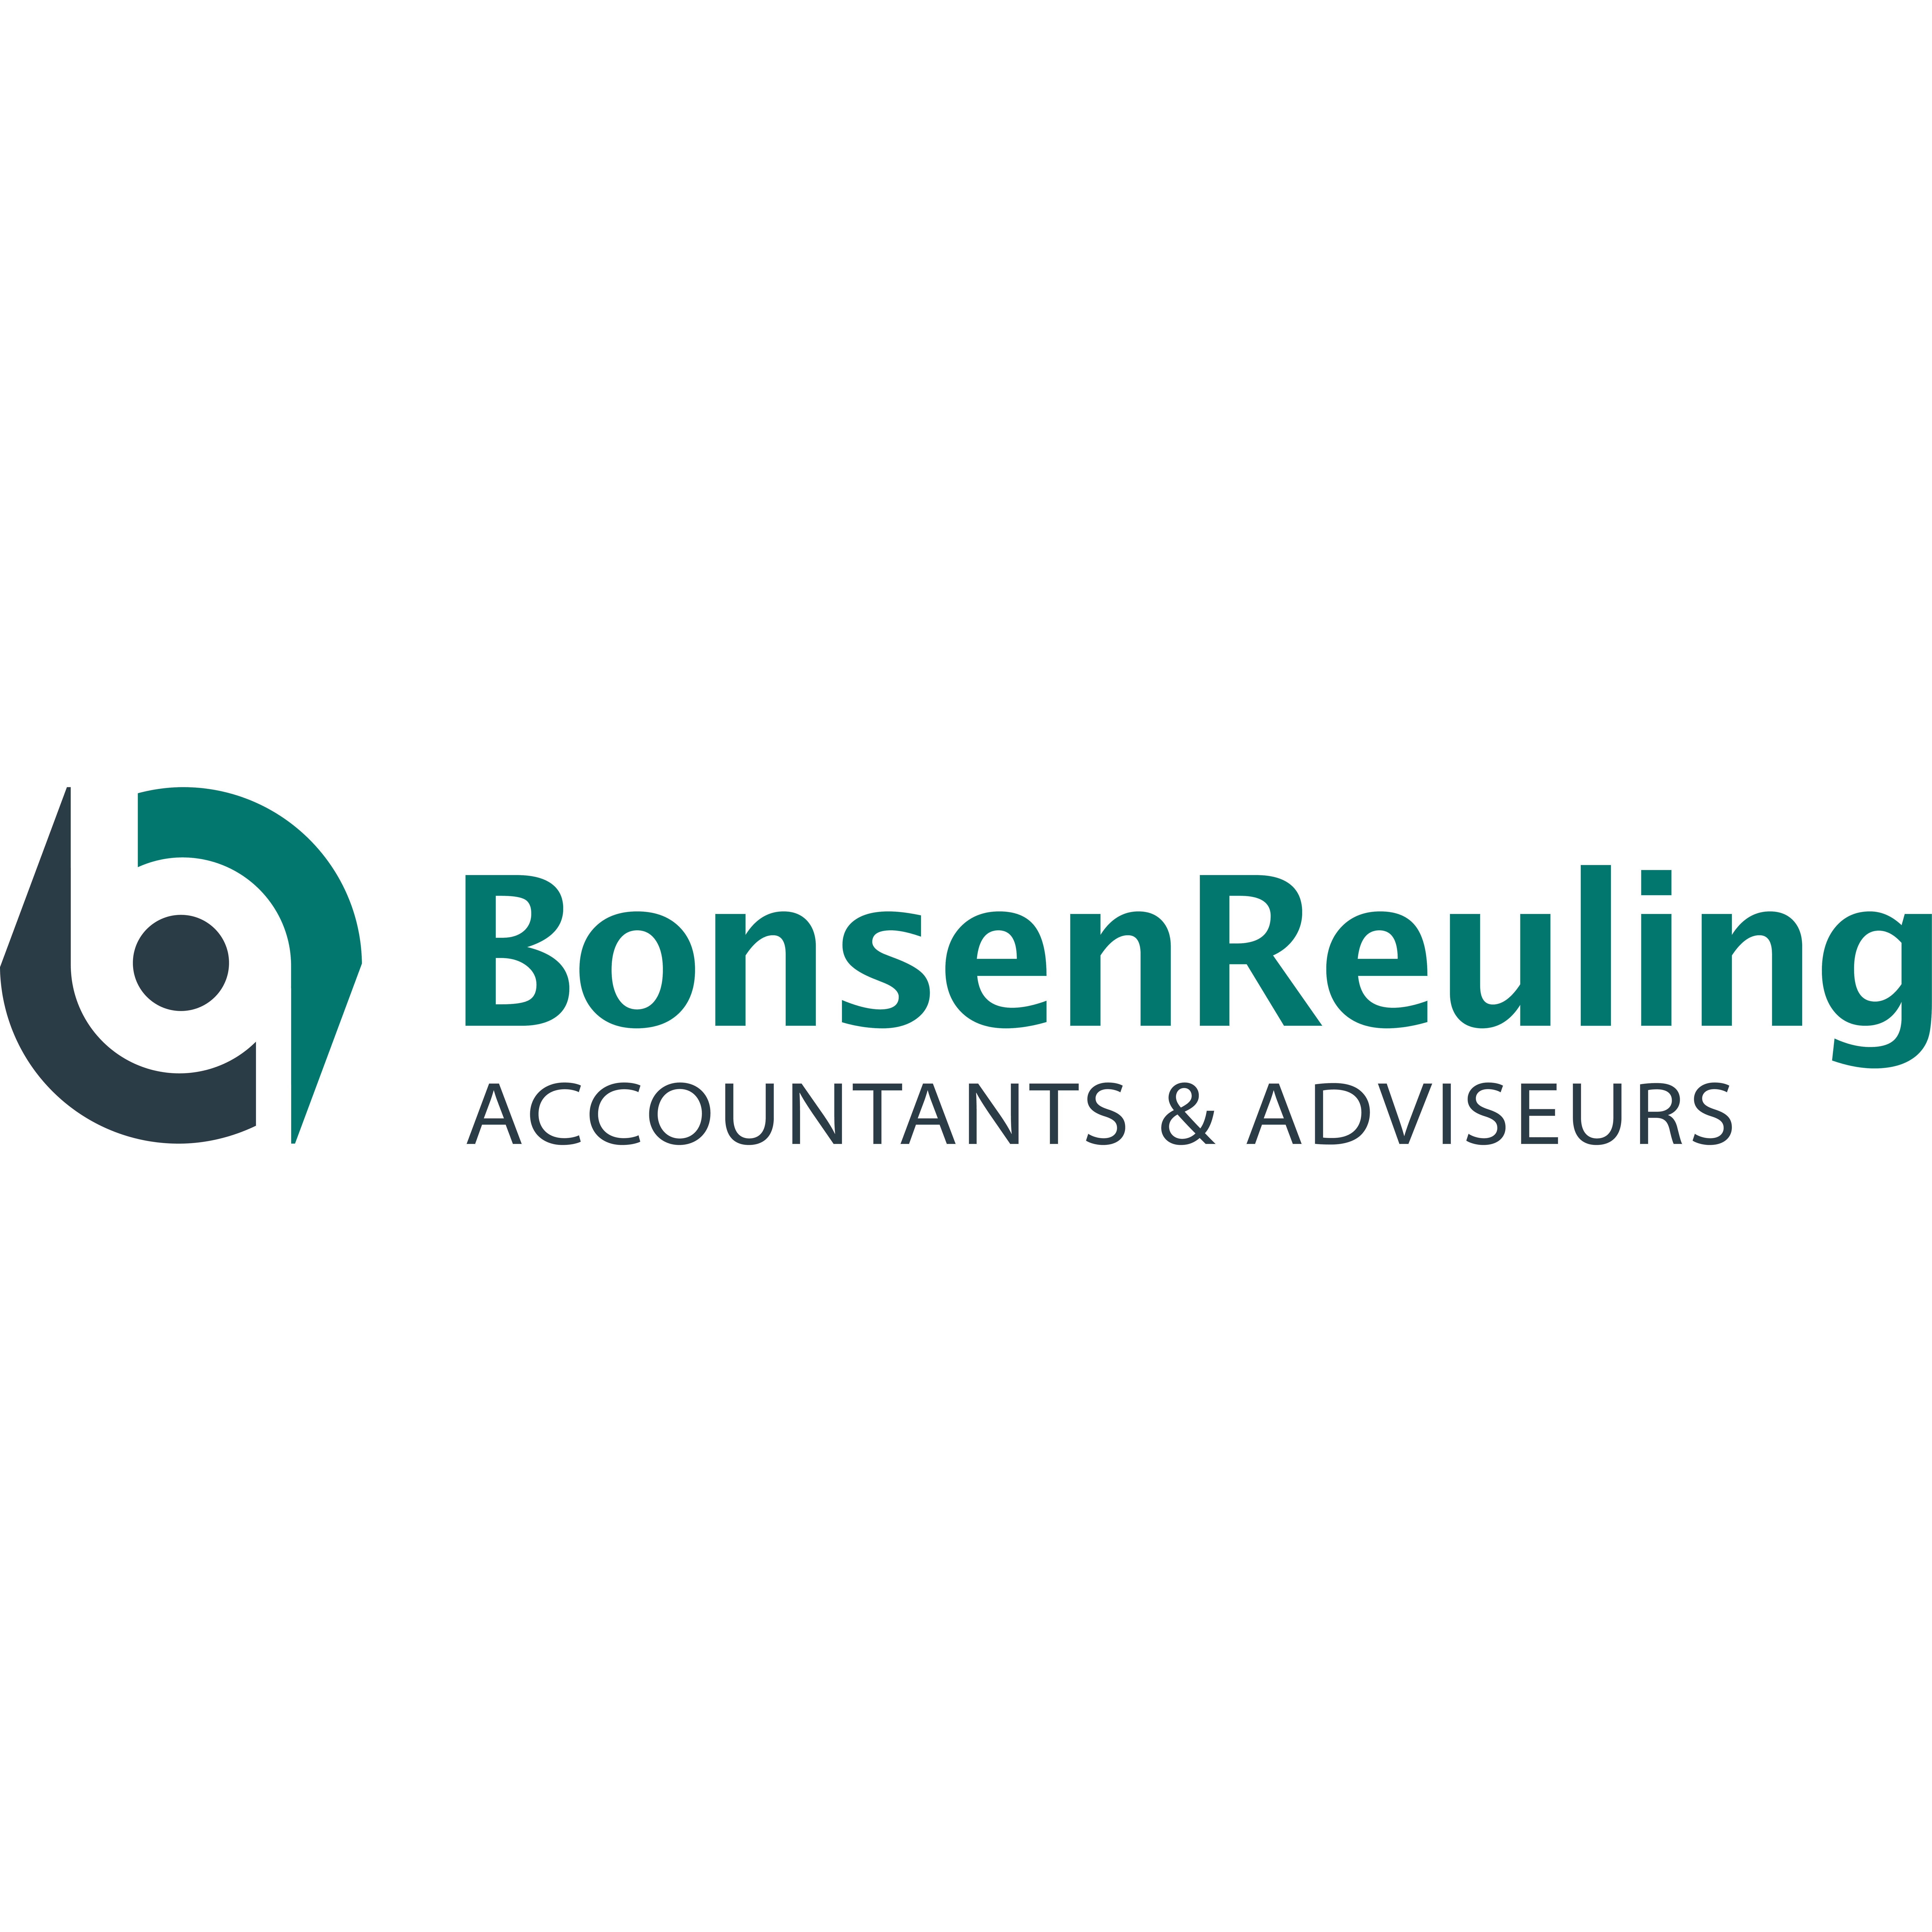 BonsenReuling Accountants & Adviseurs Doetinchem Logo